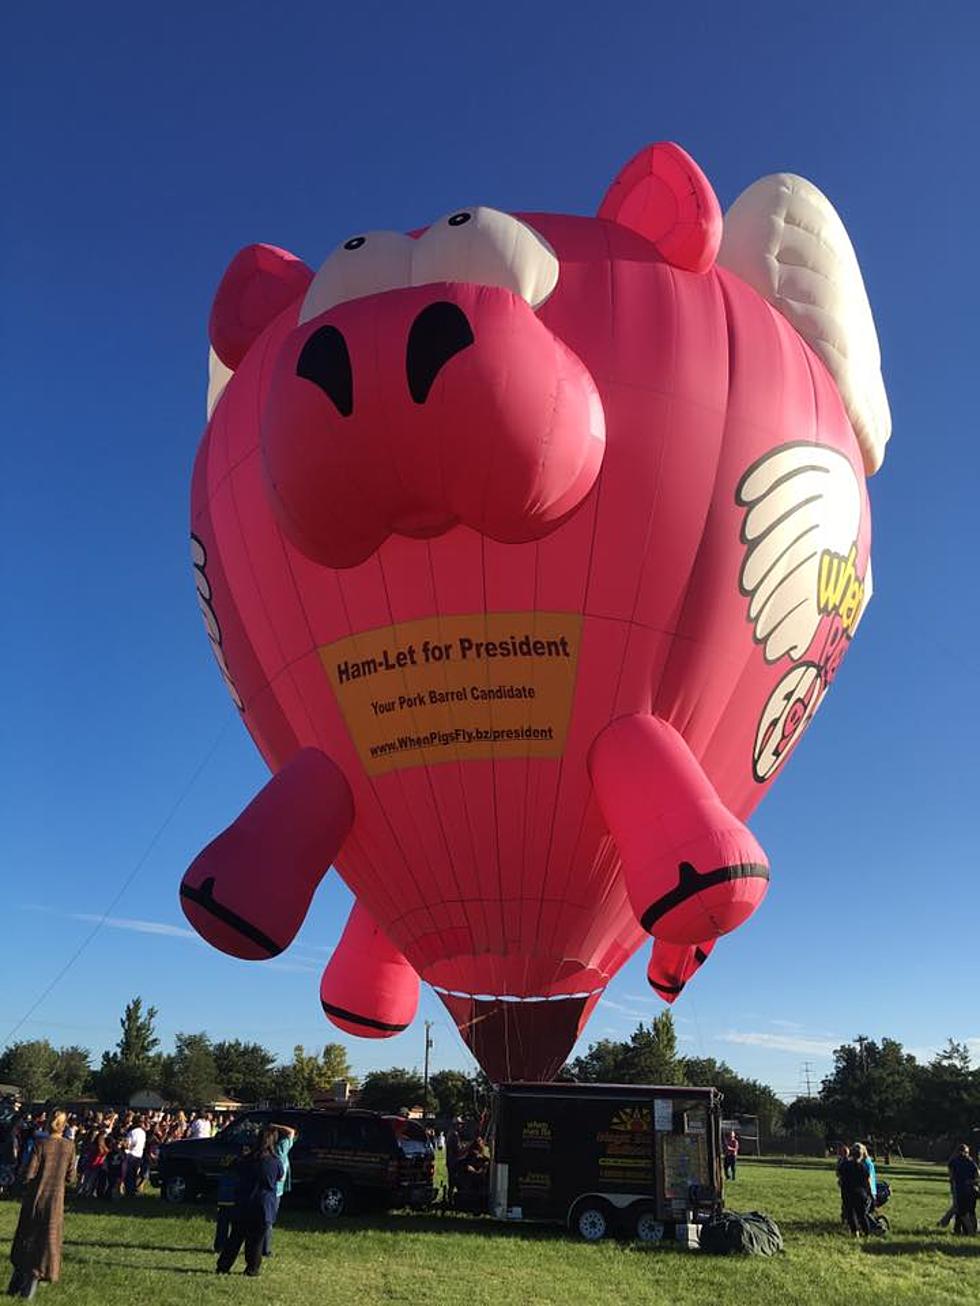 Balloon Festival Heading Back to Amarillo in September